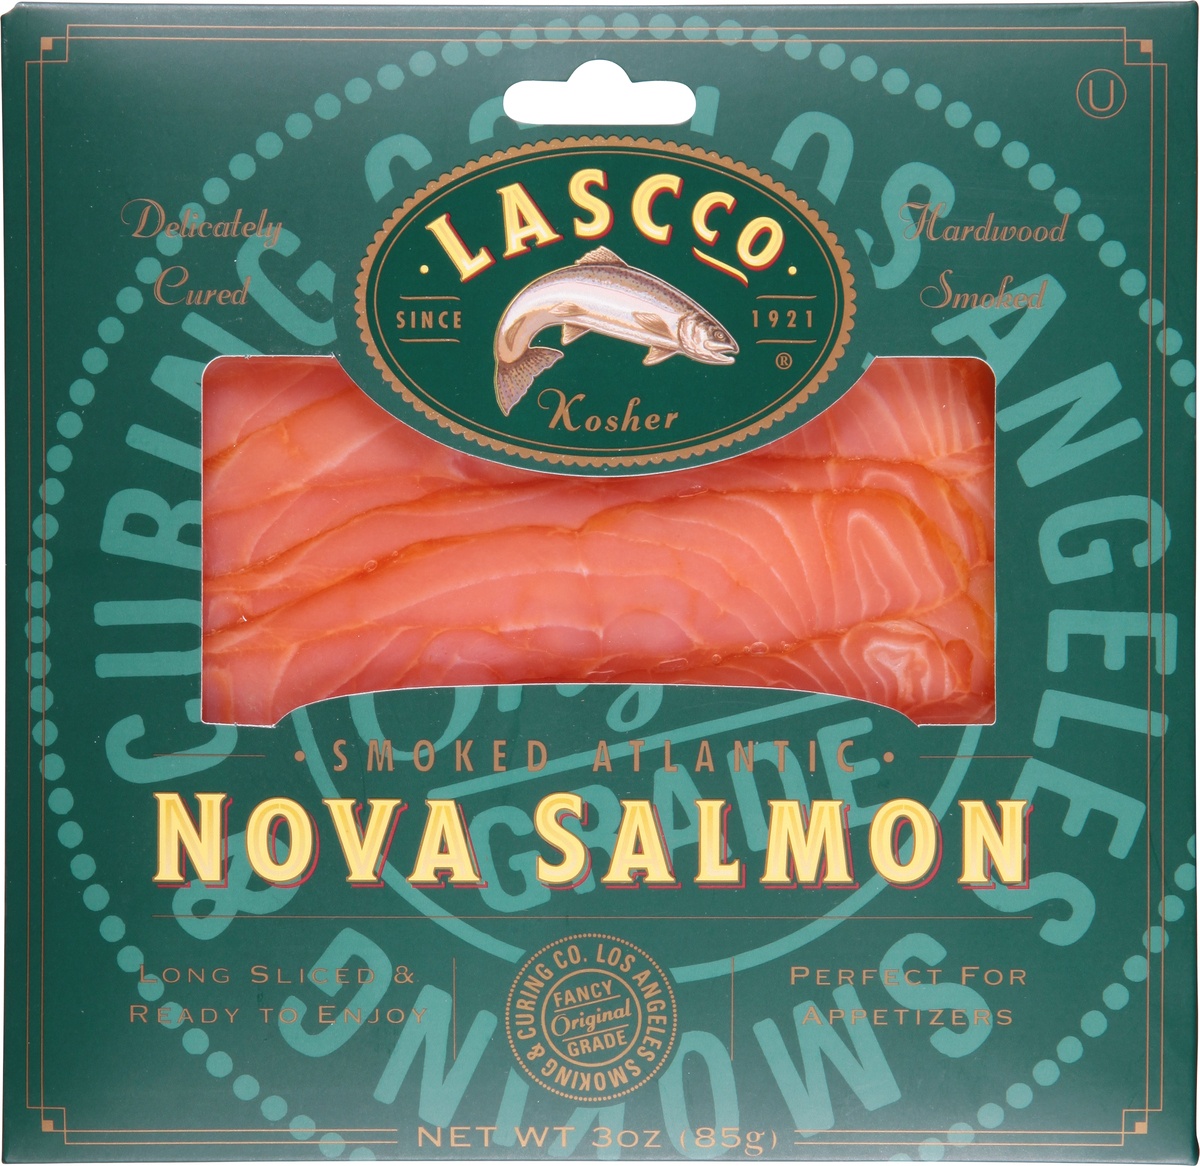 slide 6 of 9, Lascco Nova Salmon 3 oz, 